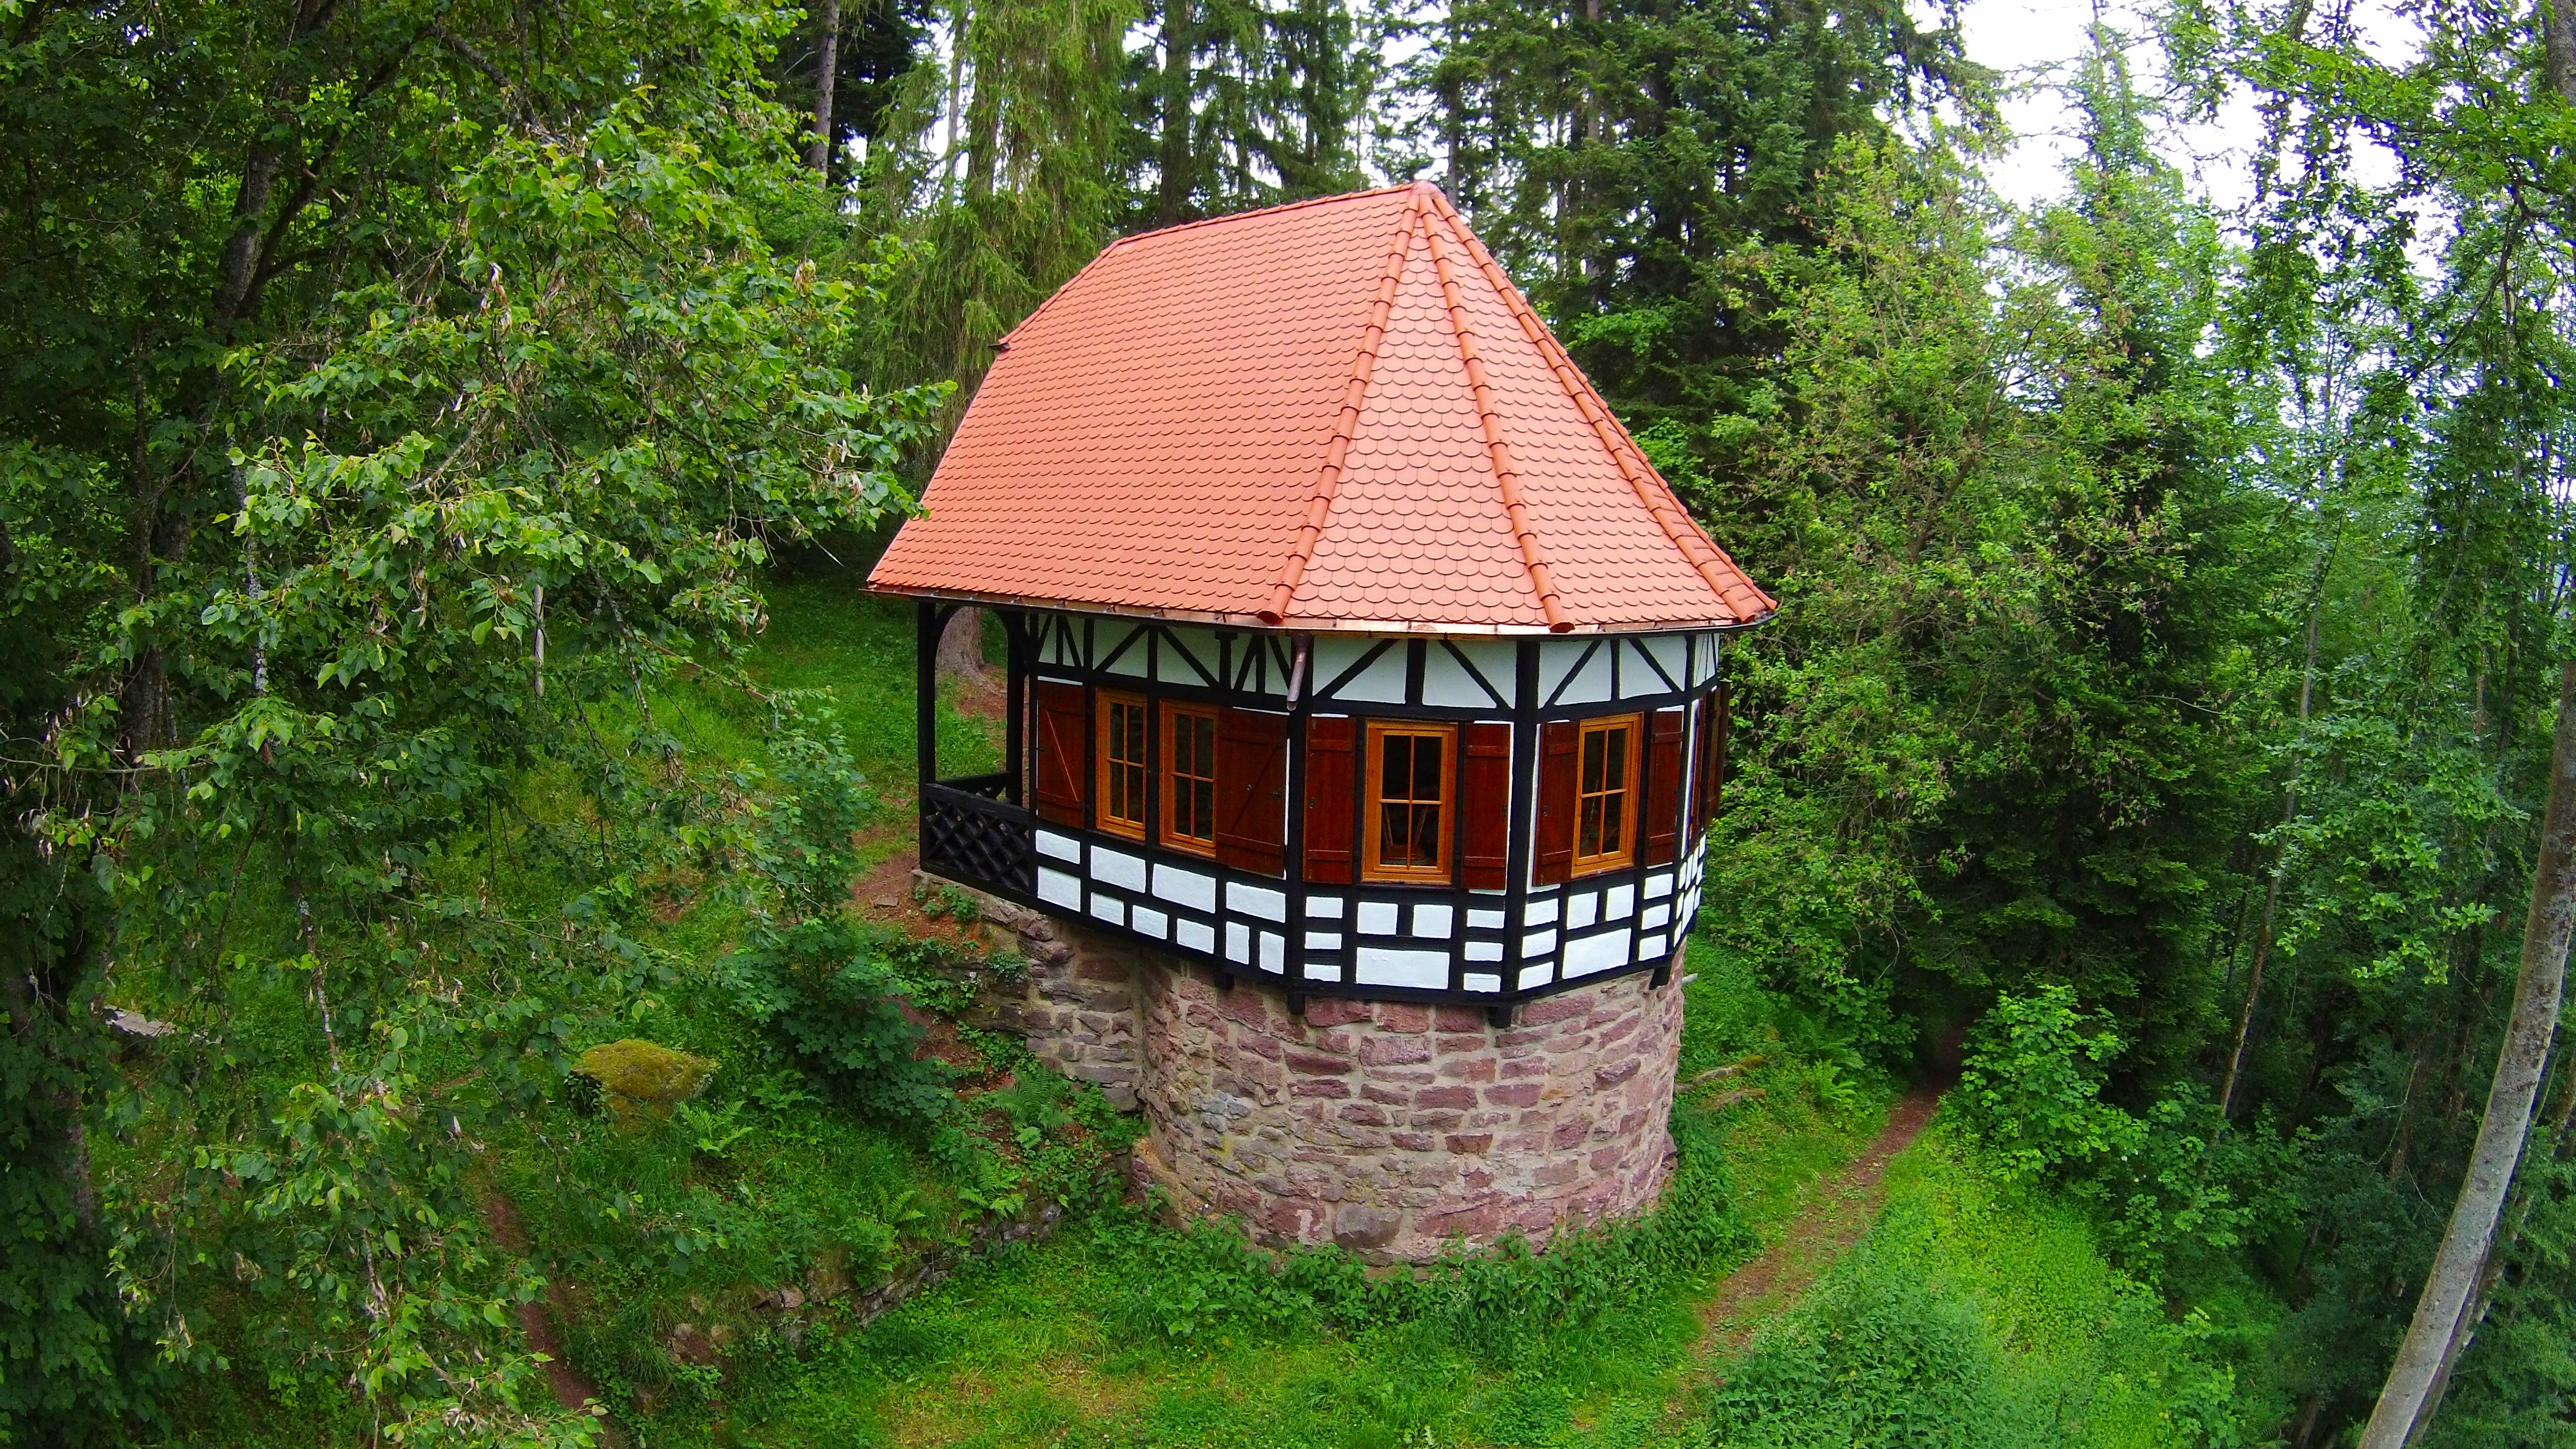  Nördlinger Hütte Fotograf Tim Polkowski 